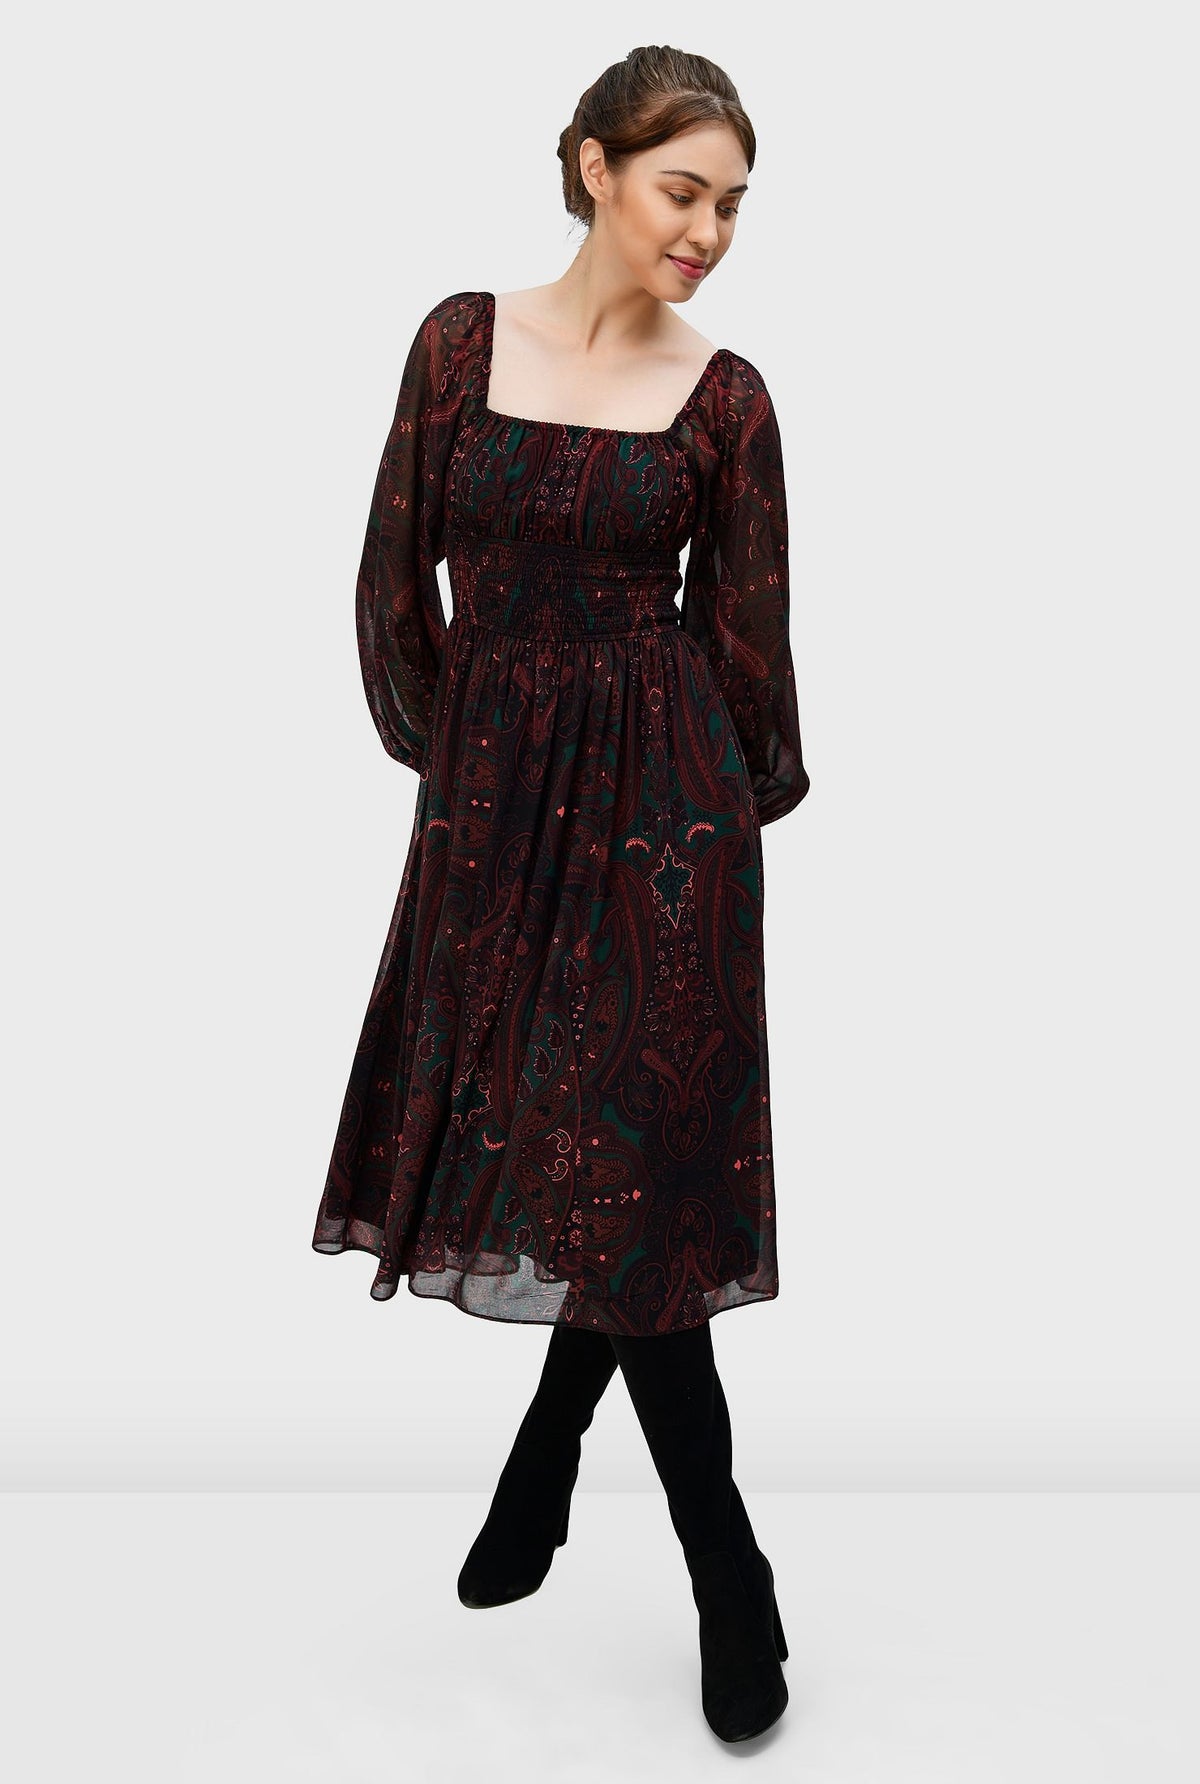 The Winifred Dress